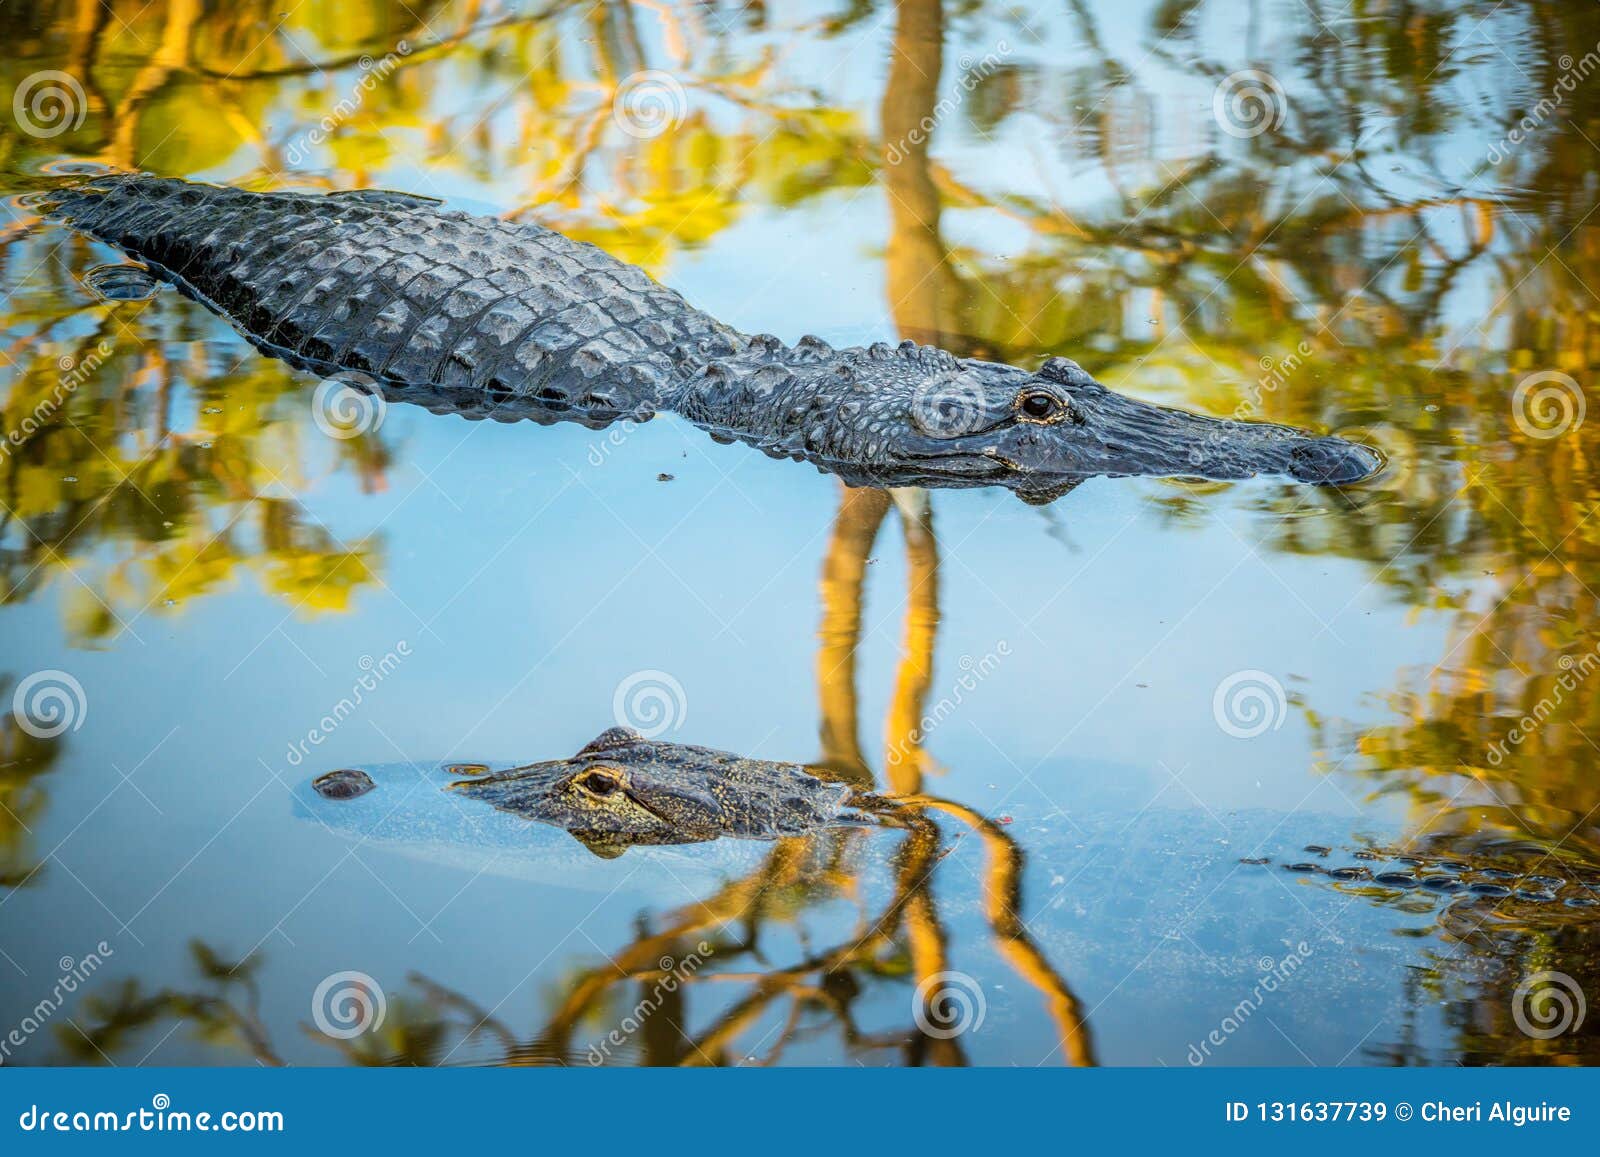 a large american alligator in orlando, florida